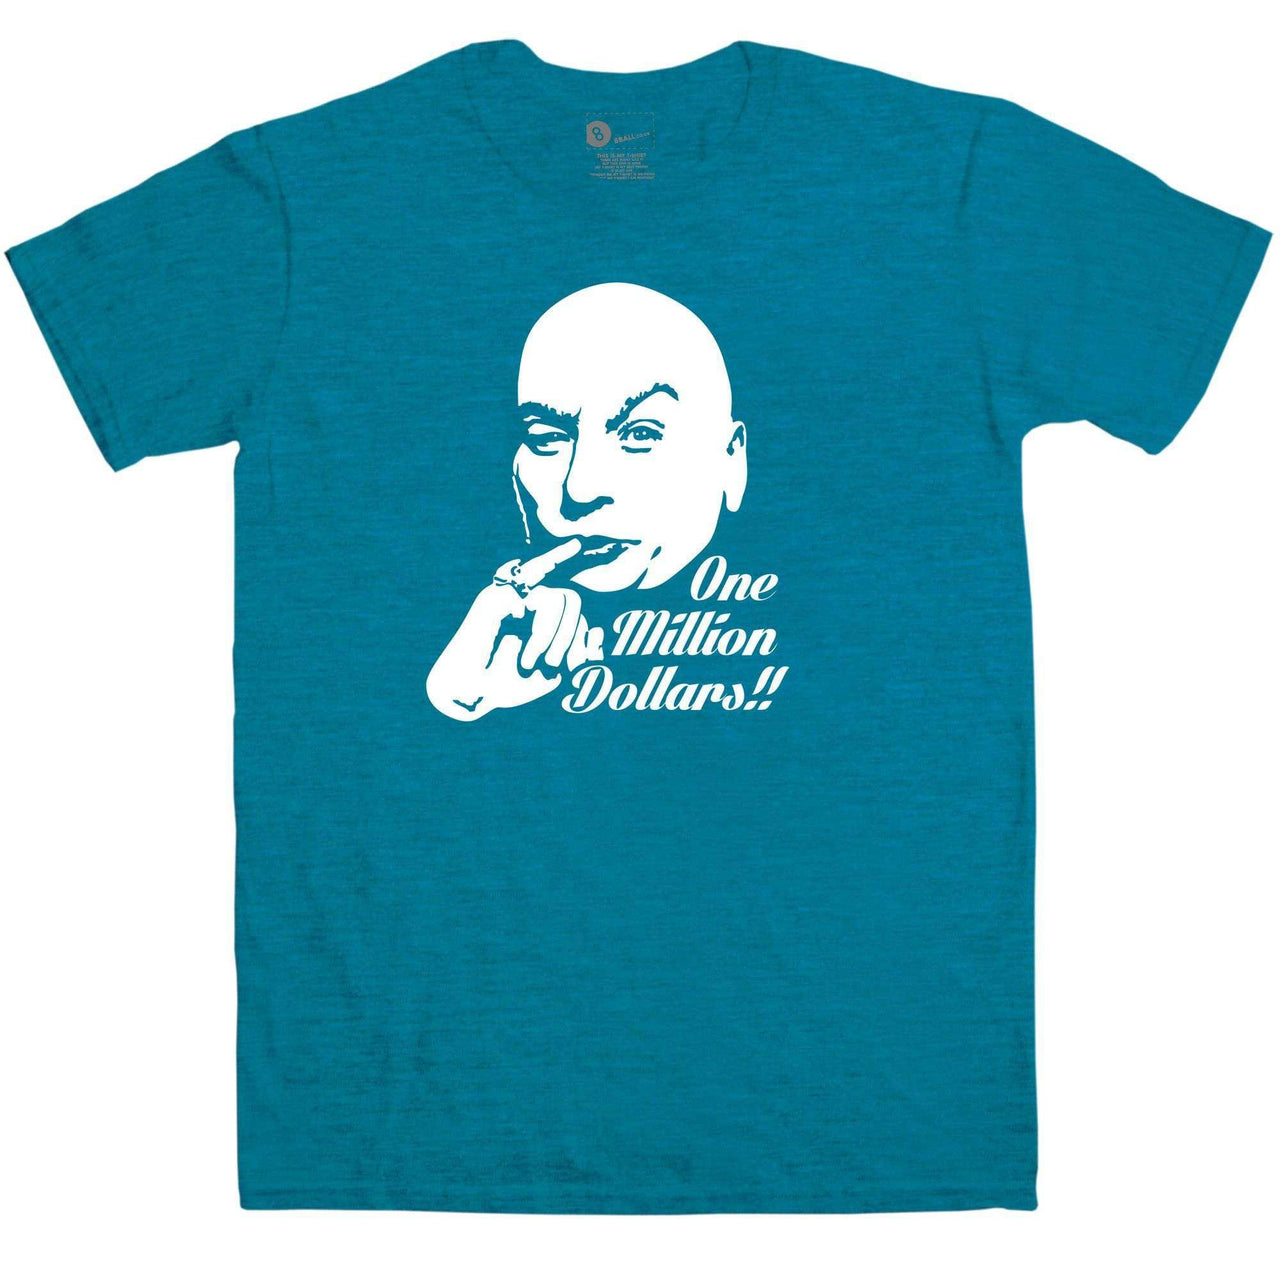 One Million Dollars T-Shirt For Men, Inspired By Austim Powers 8Ball